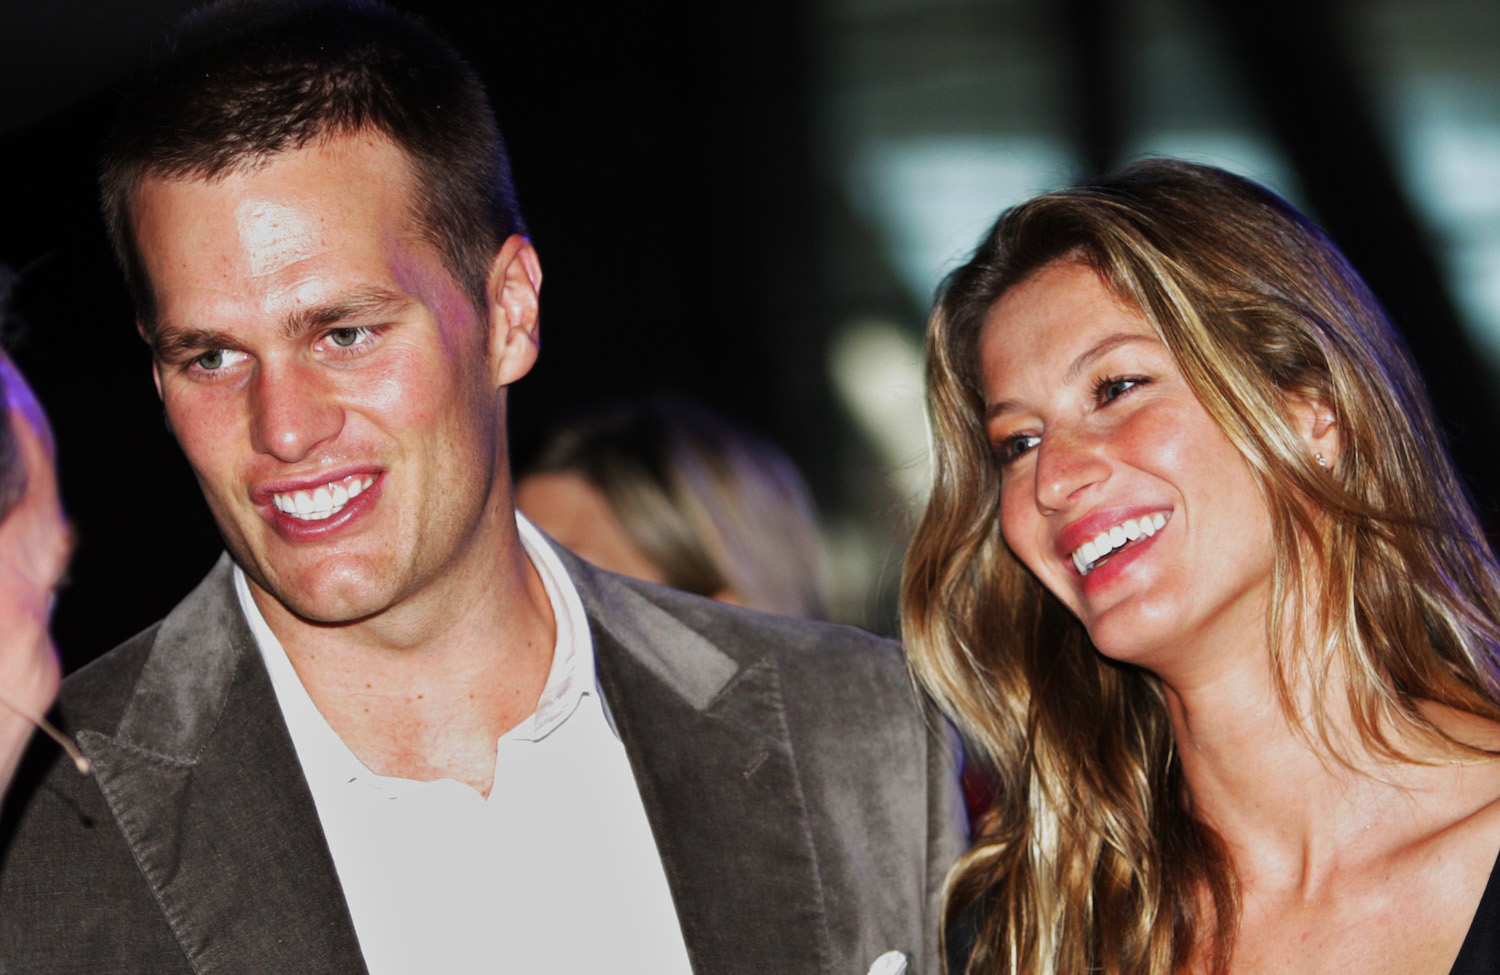 Tom Brady and Gisele Bundchen smiling together